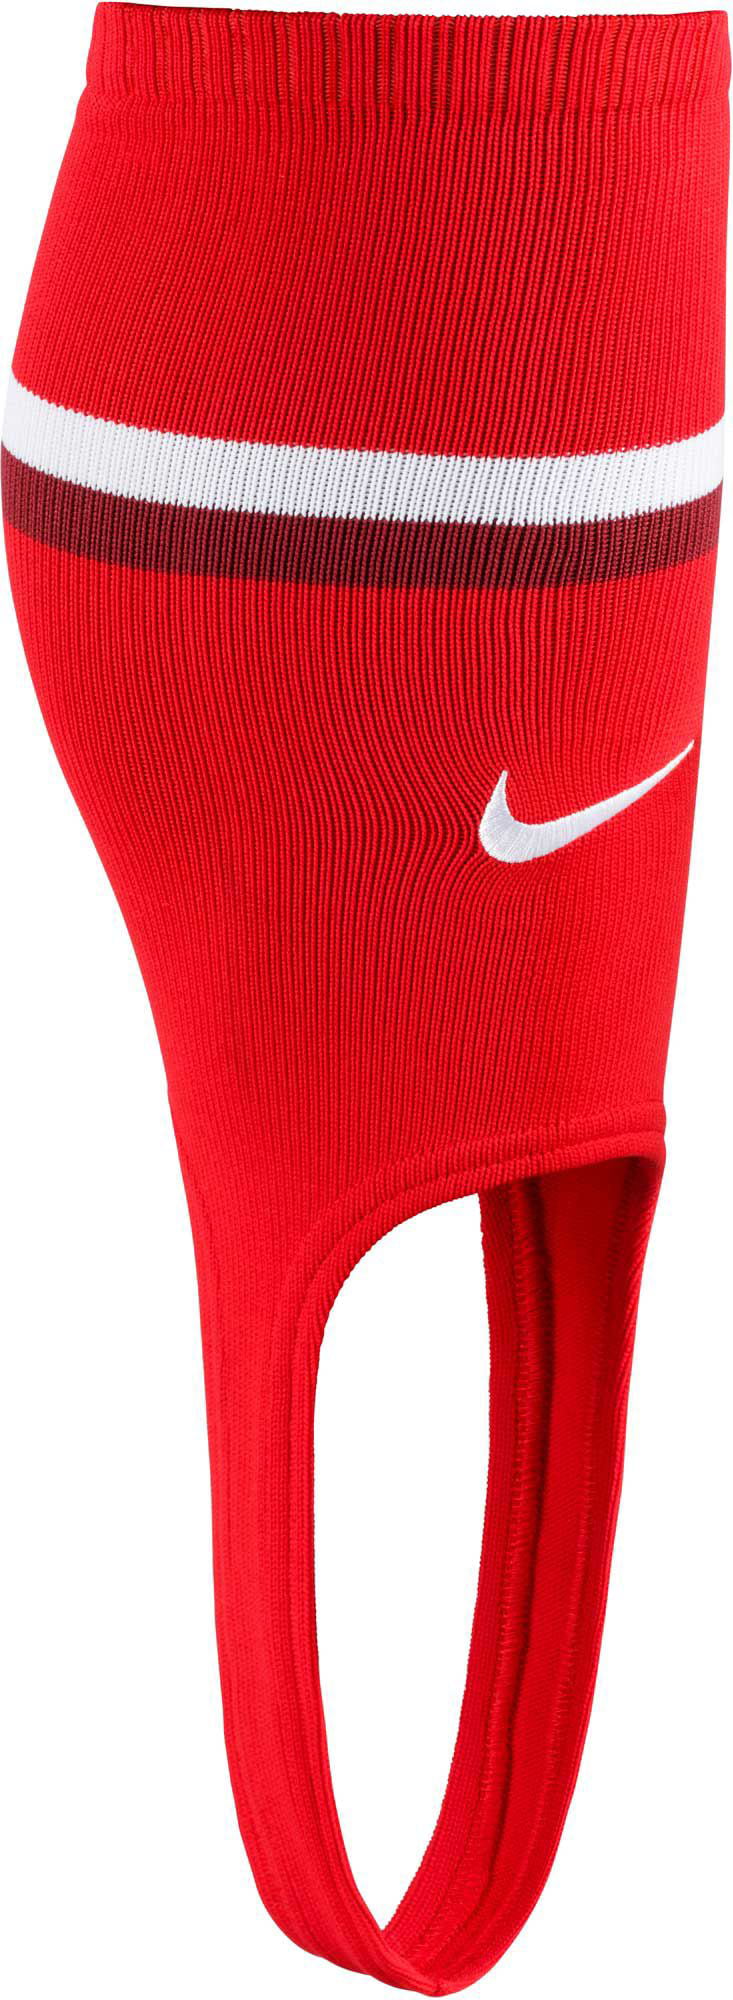 Nike - Nike Adult Vapor Stirrup Socks 